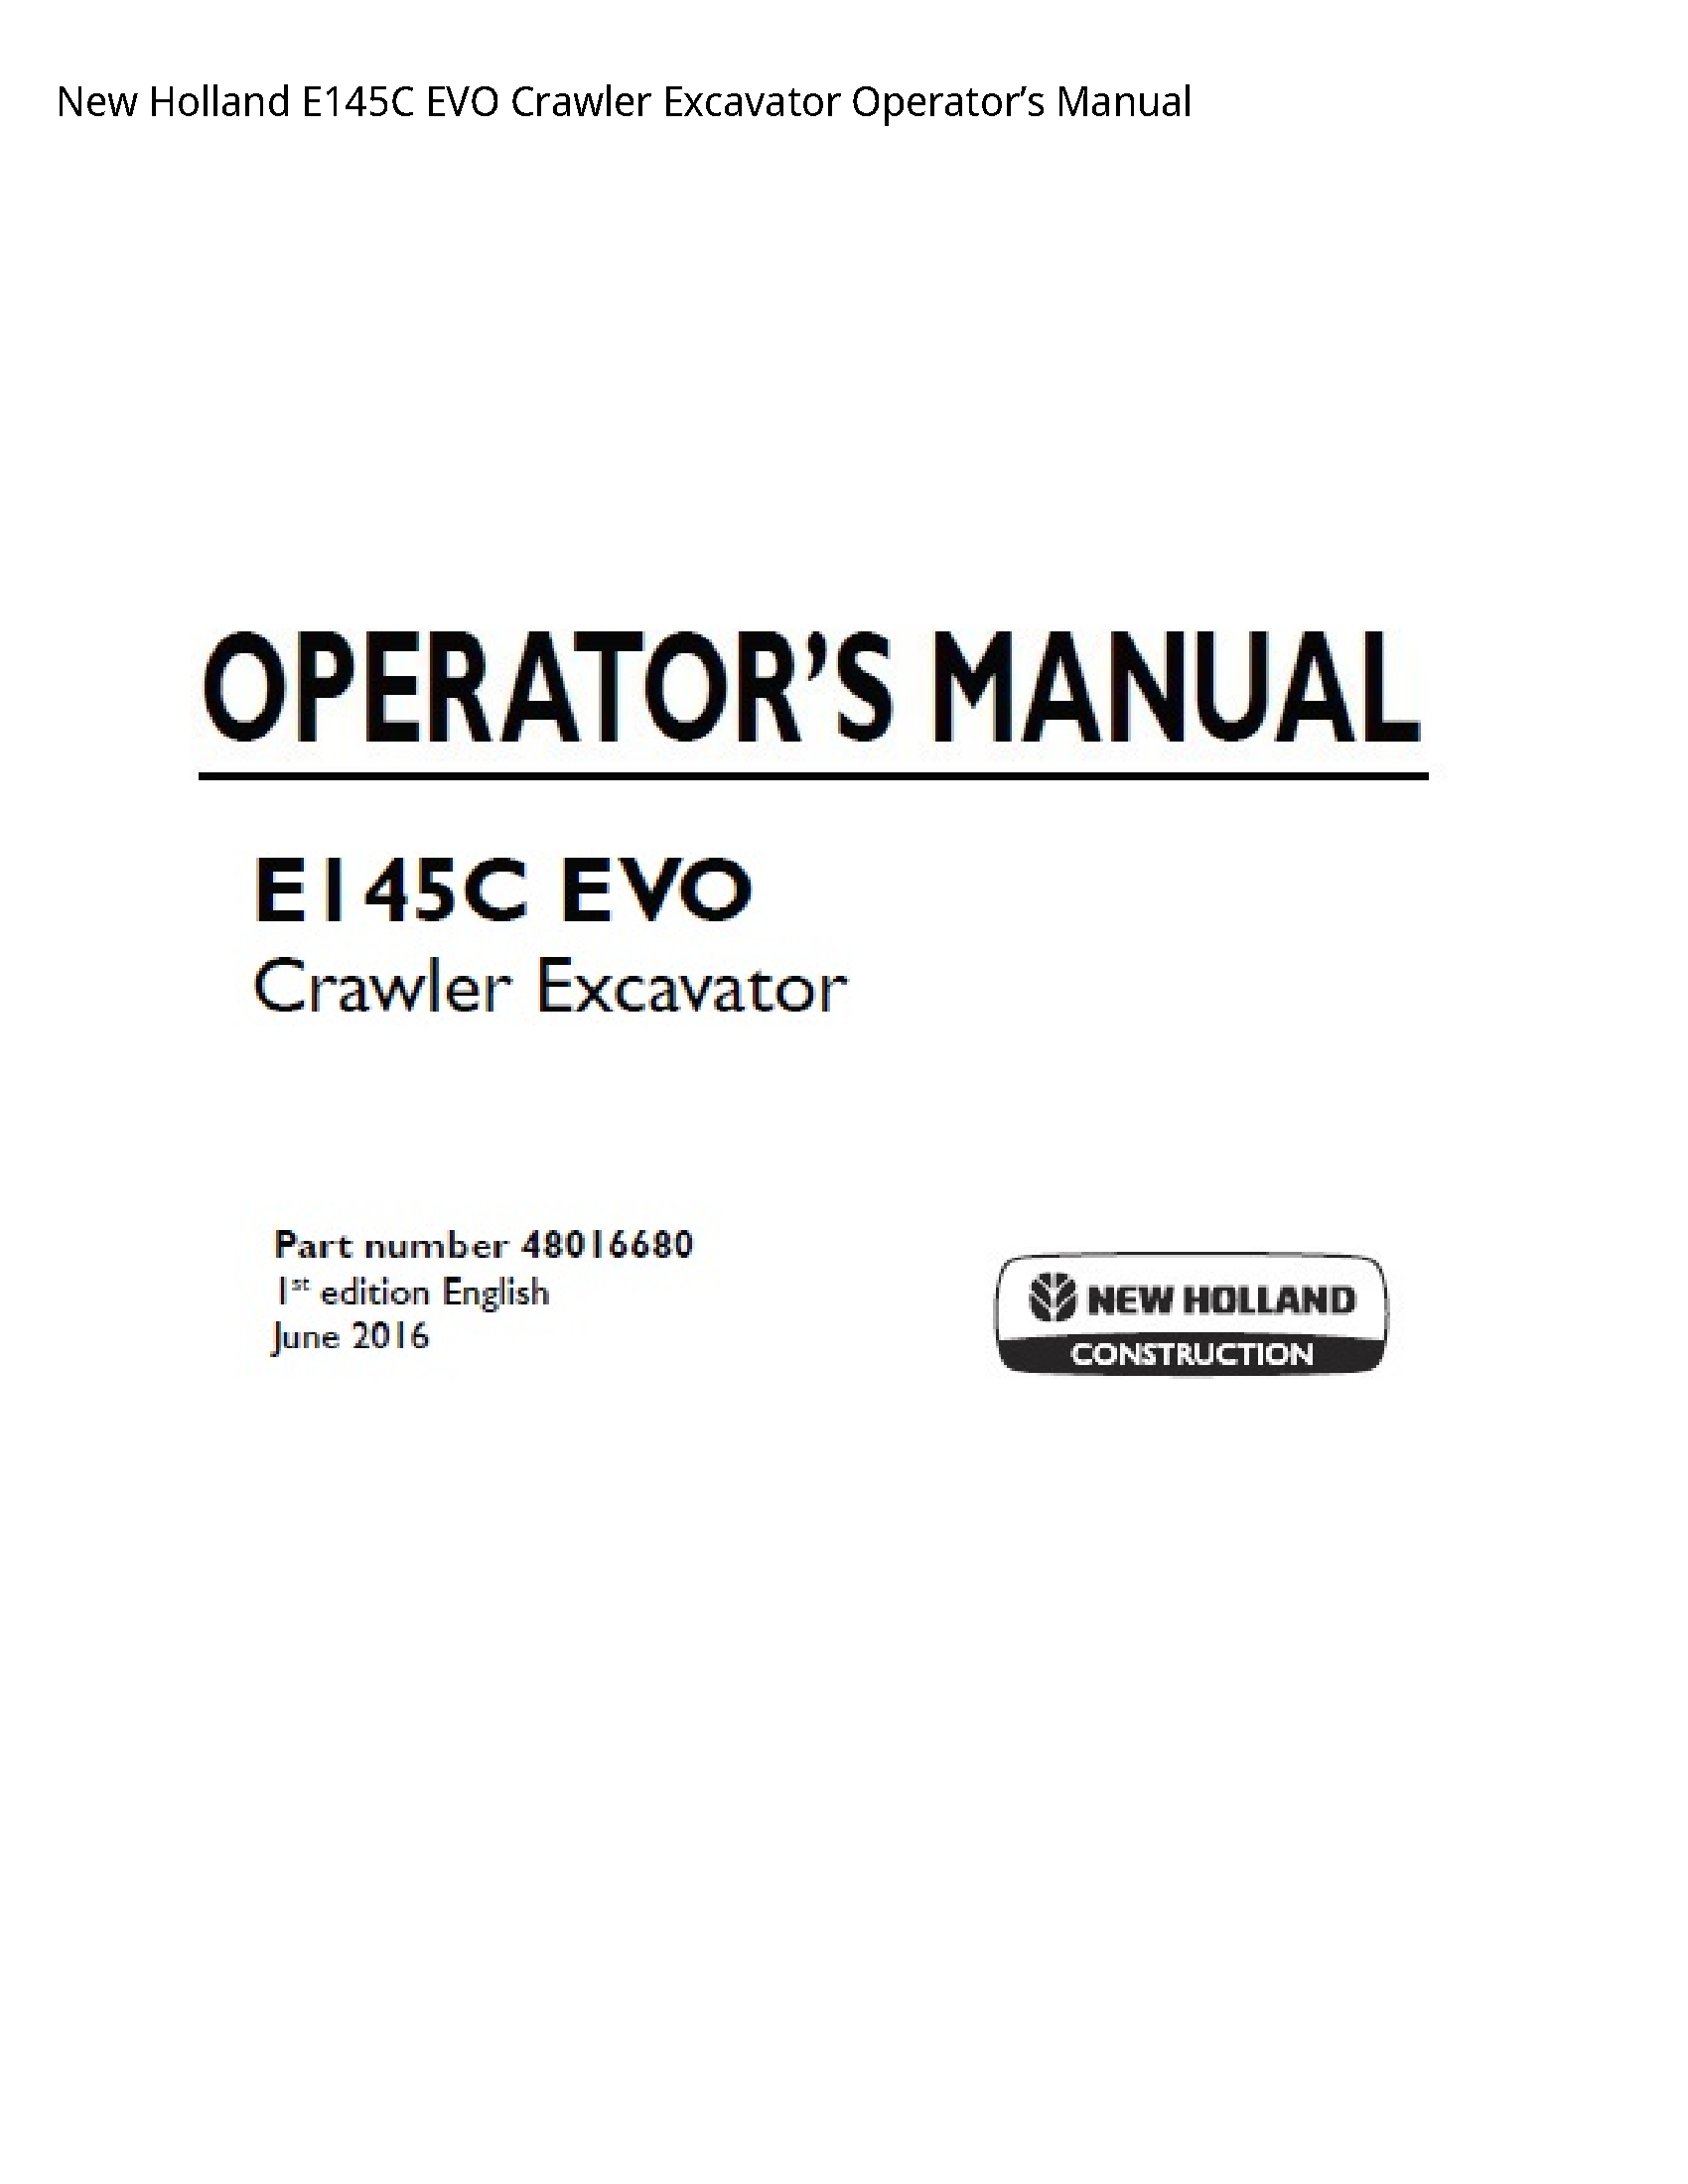 New Holland E145C EVO Crawler Excavator Operator’s manual